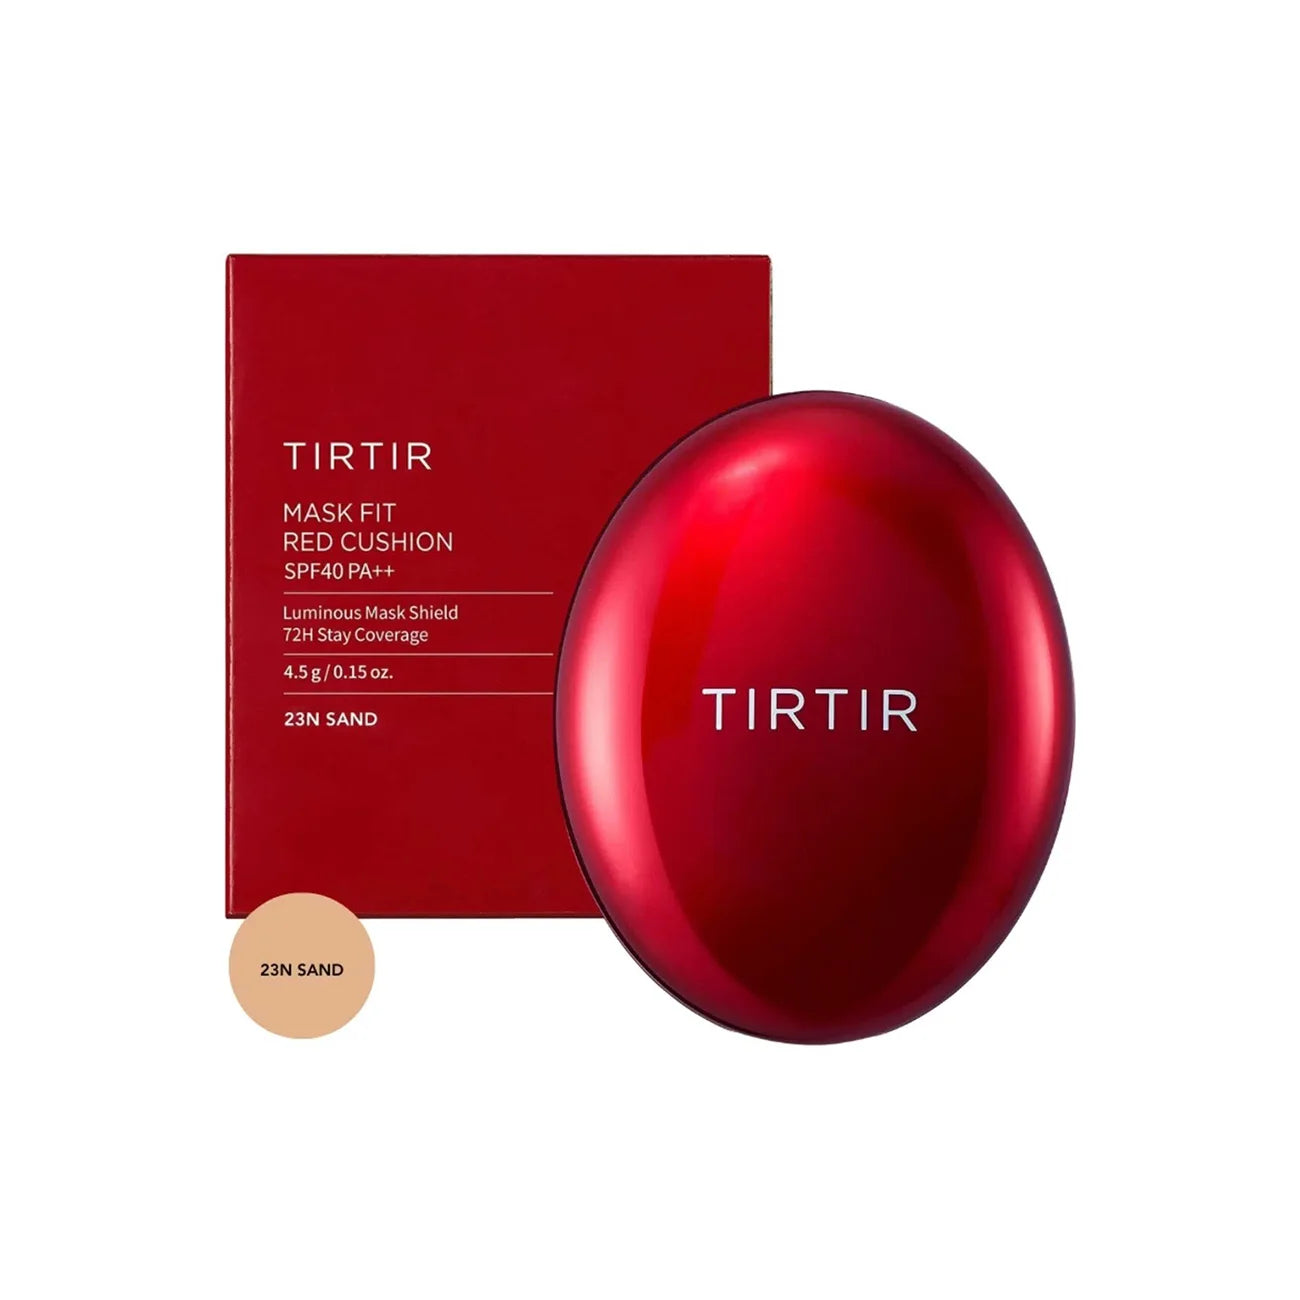 TIRTIR Mask Fit Red Cushion 23N Sand best Korean foundation makeup base medium shades SPF40 PA++ long lasting coverage K Beauty World